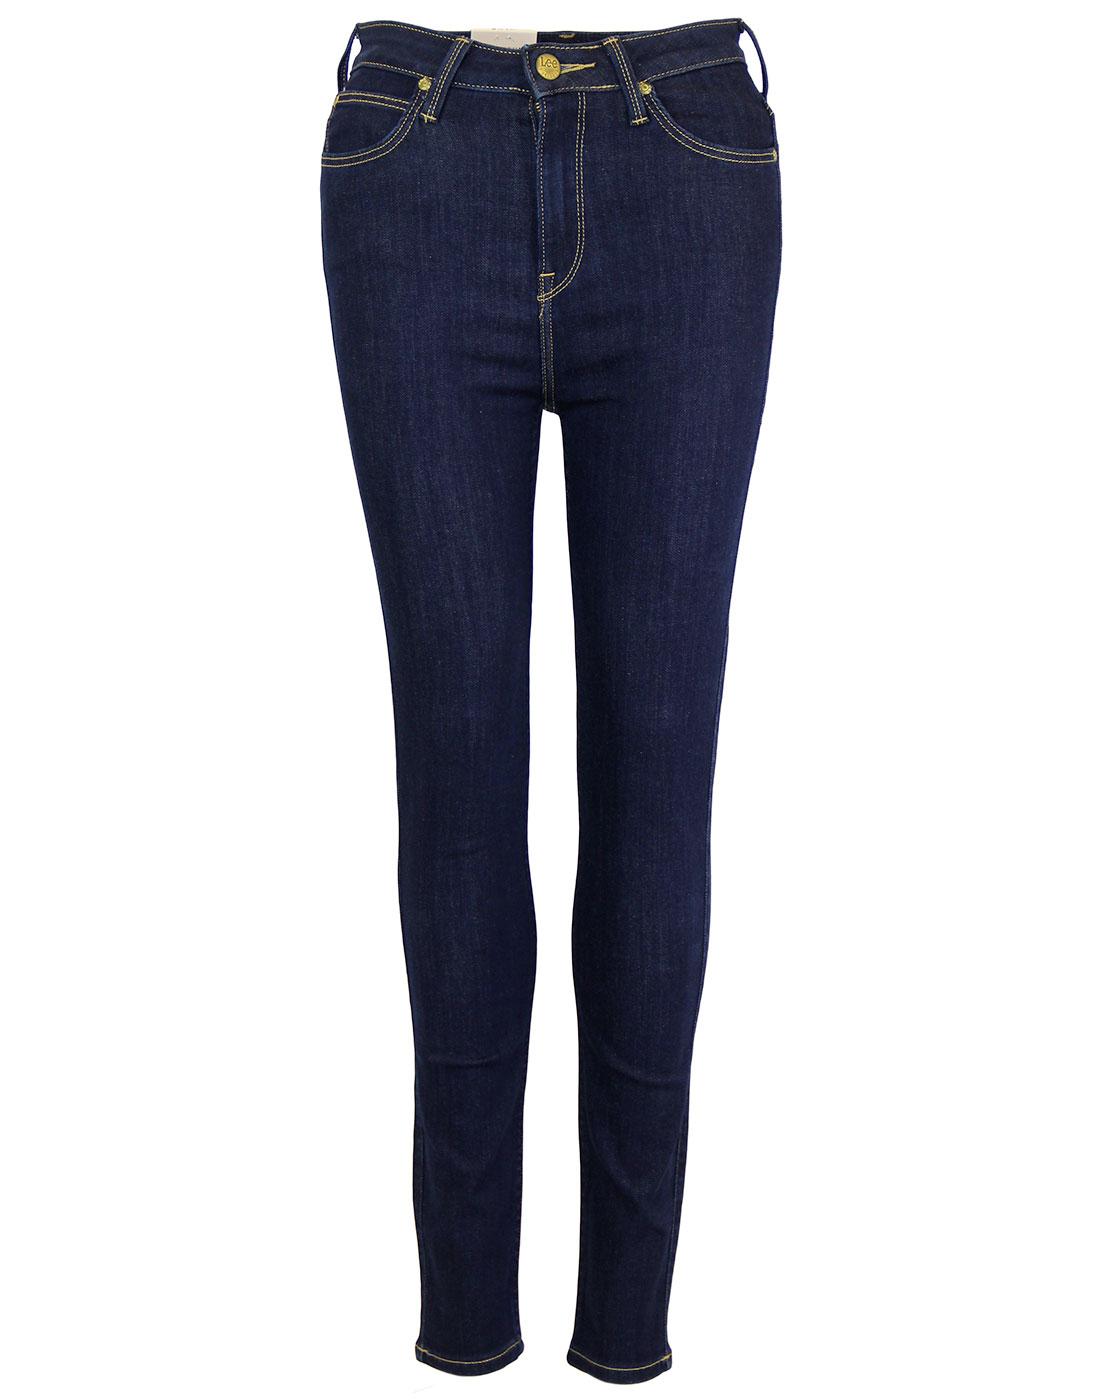 Varen terugtrekken stortbui LEE Skyler Retro Mod High Waist Skinny Denim Jeans in Solid Blue